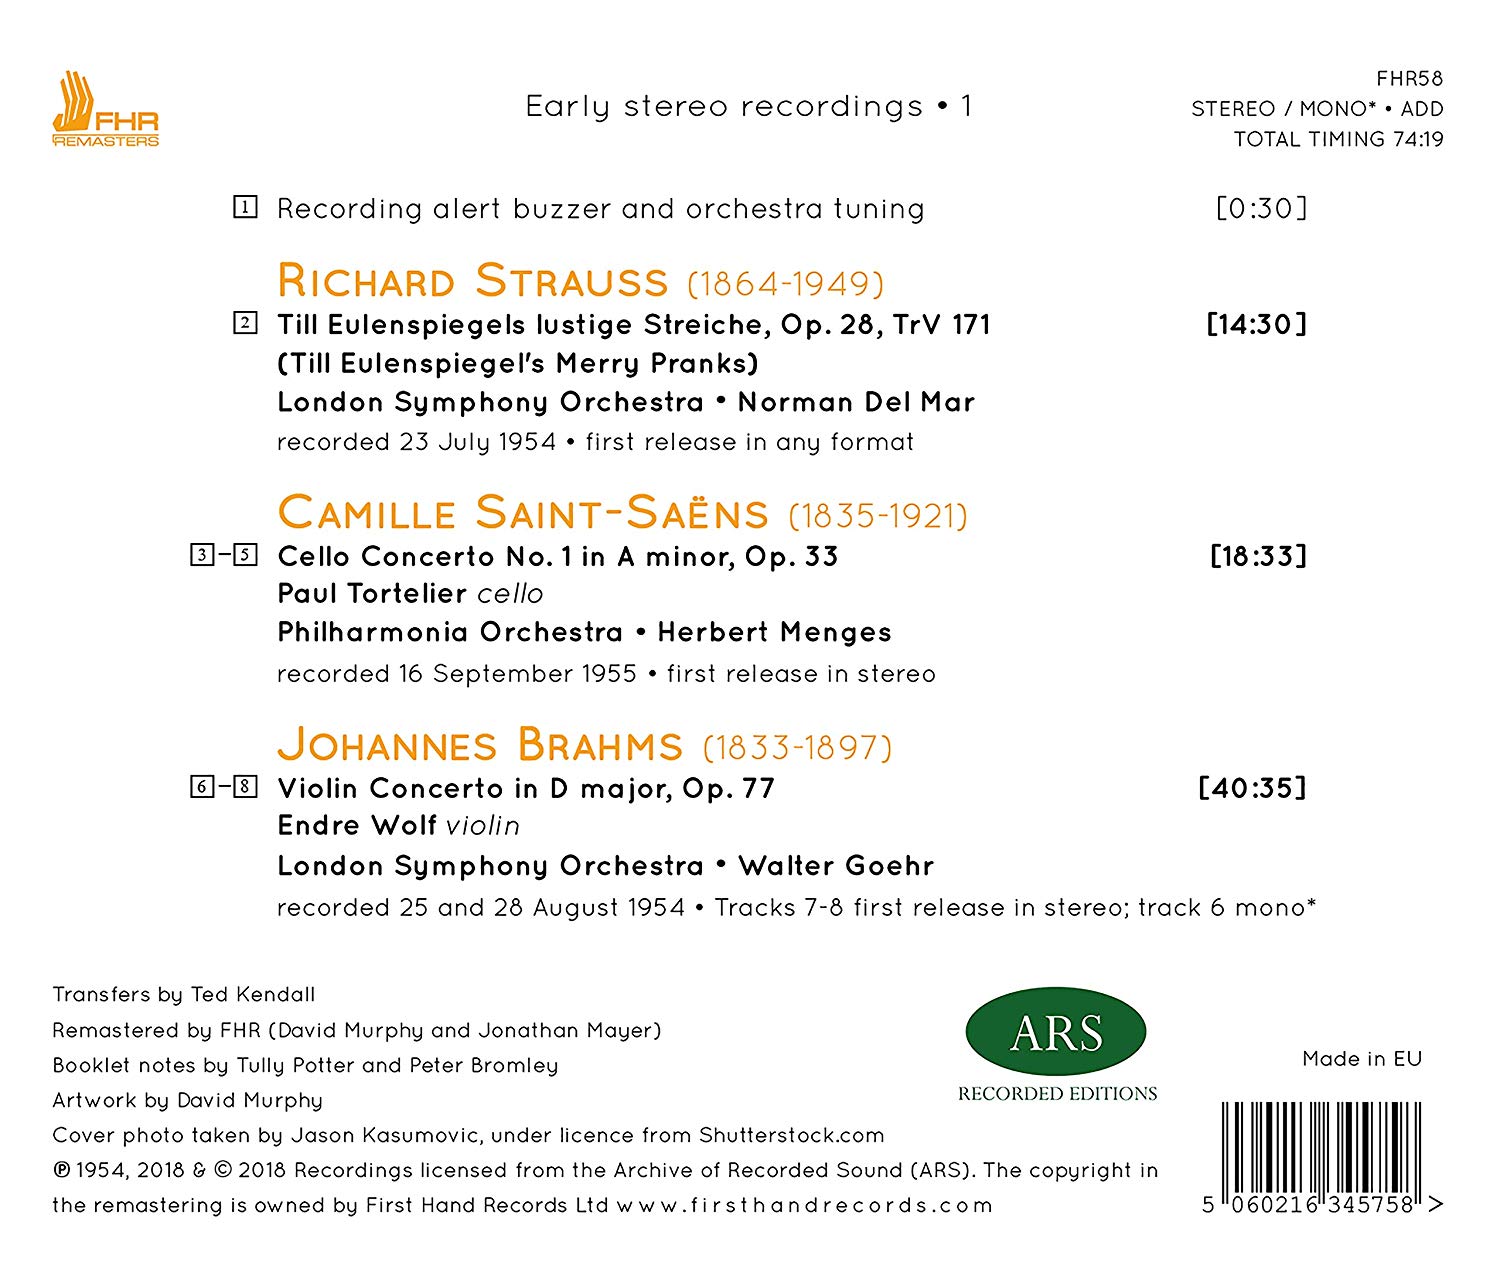 Paul Tortelier 슈트라우스: 틸 오일렌슈피겔의 유쾌한 장난 / 생상스: 첼로 협주곡 / 브람스: 바이올린 협주곡 (Early Stereo Recordings - R. Strauss, Saint-Saens & Brahms) 폴 토르틀리에